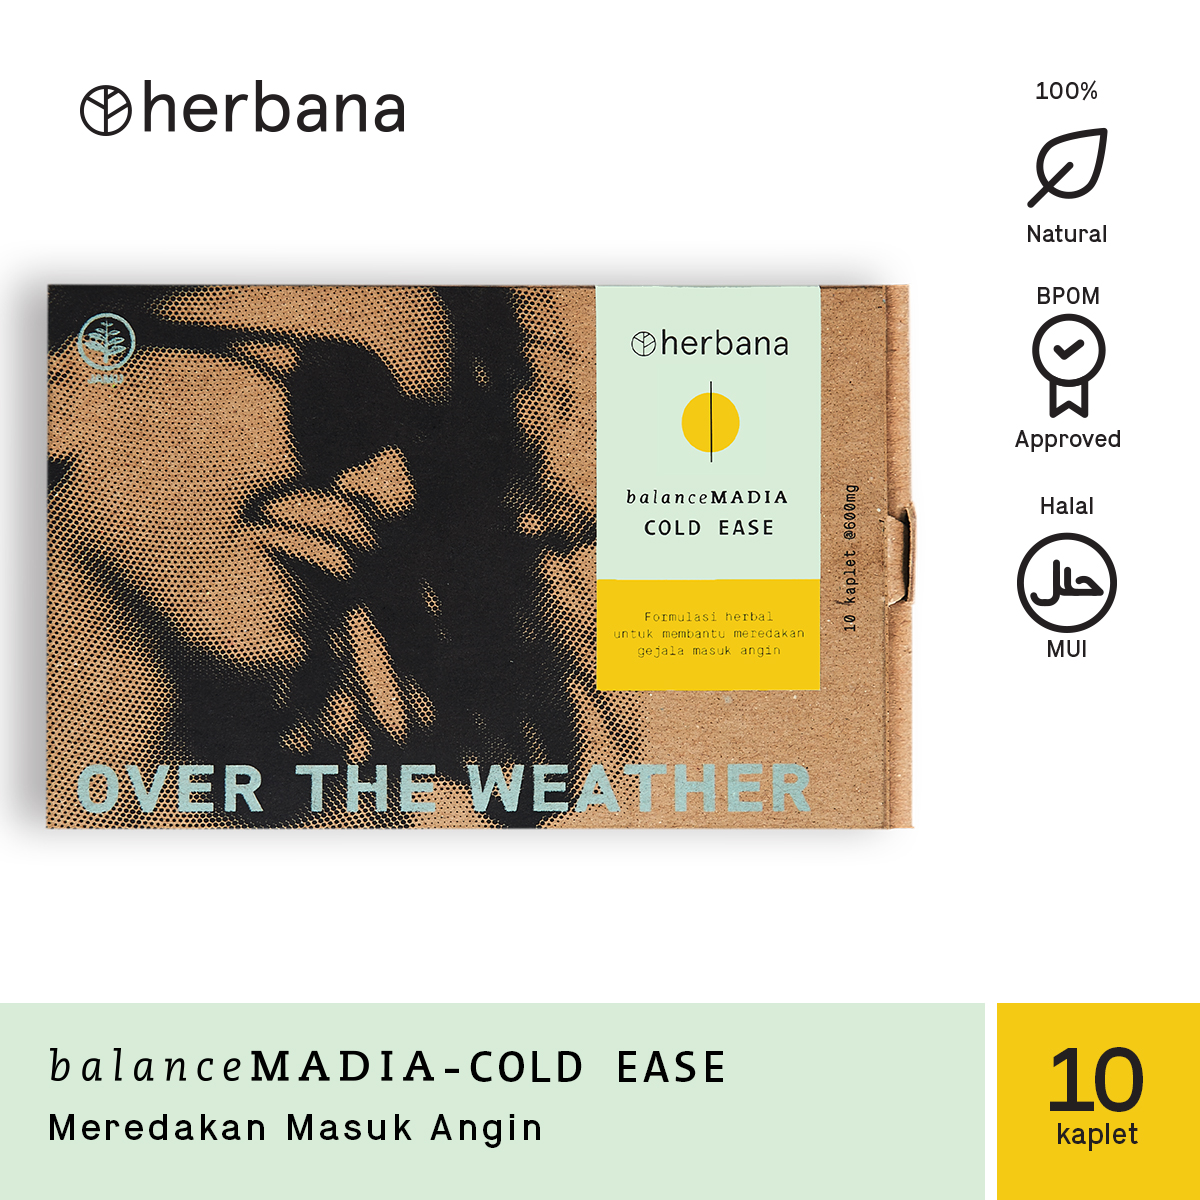 herbana-balance-madia-cold-ease-10-caplets-49-1615972929.jpg